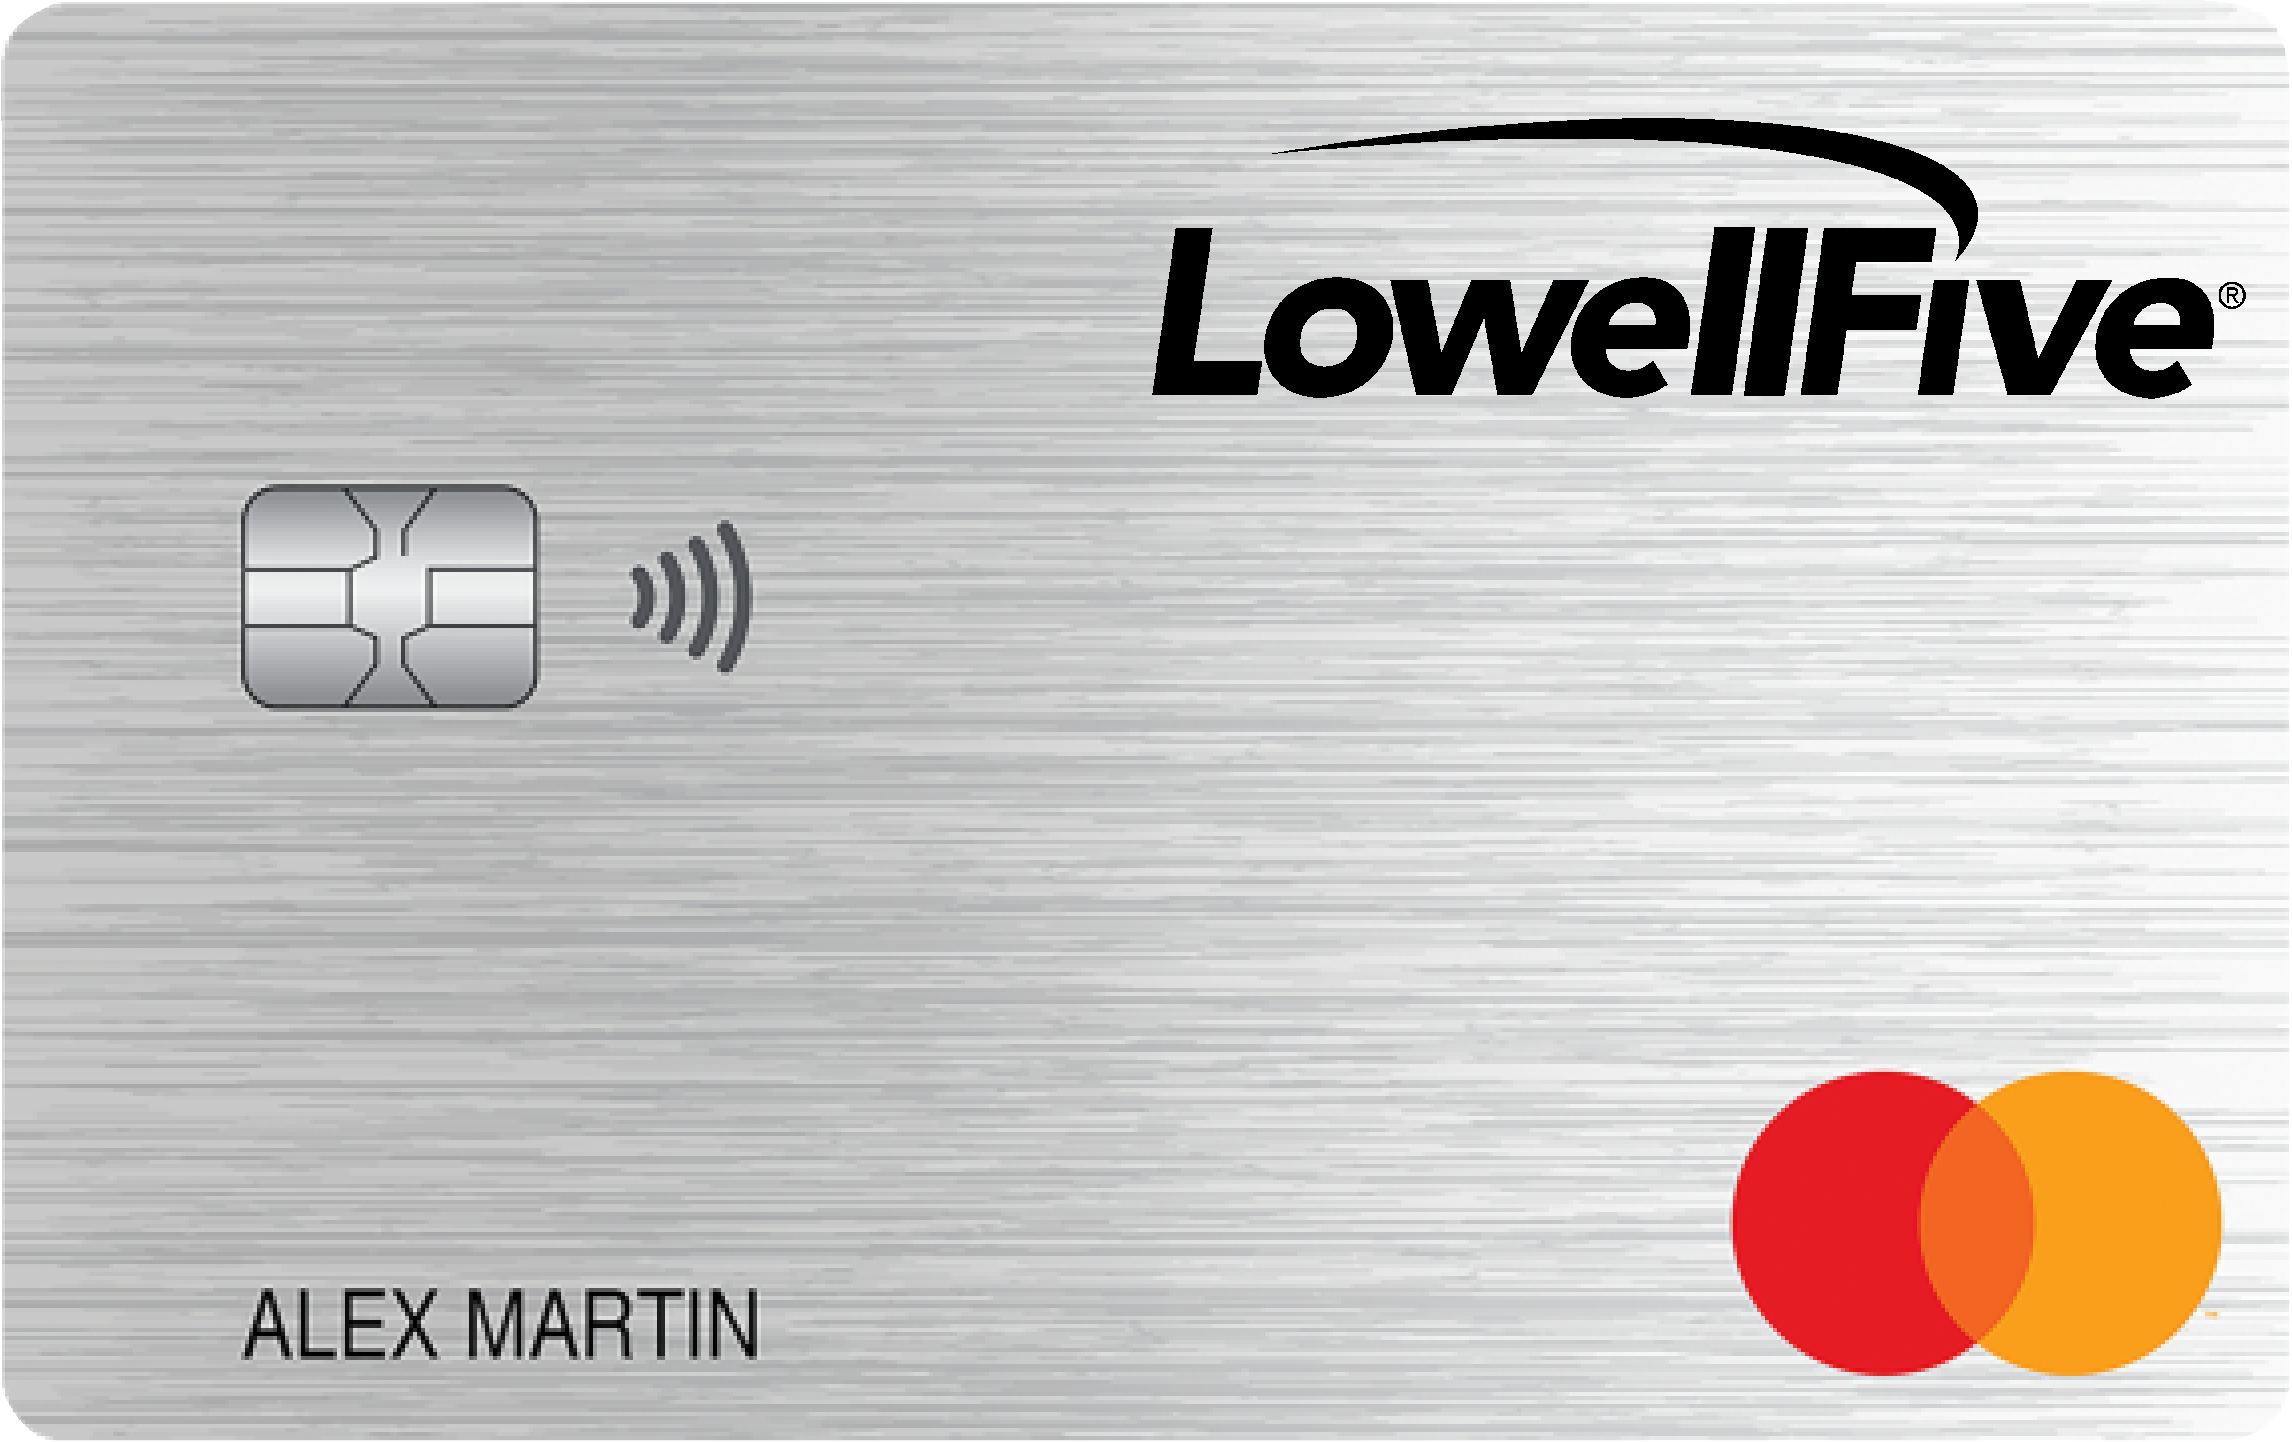 Lowell Five Bank Platinum Card